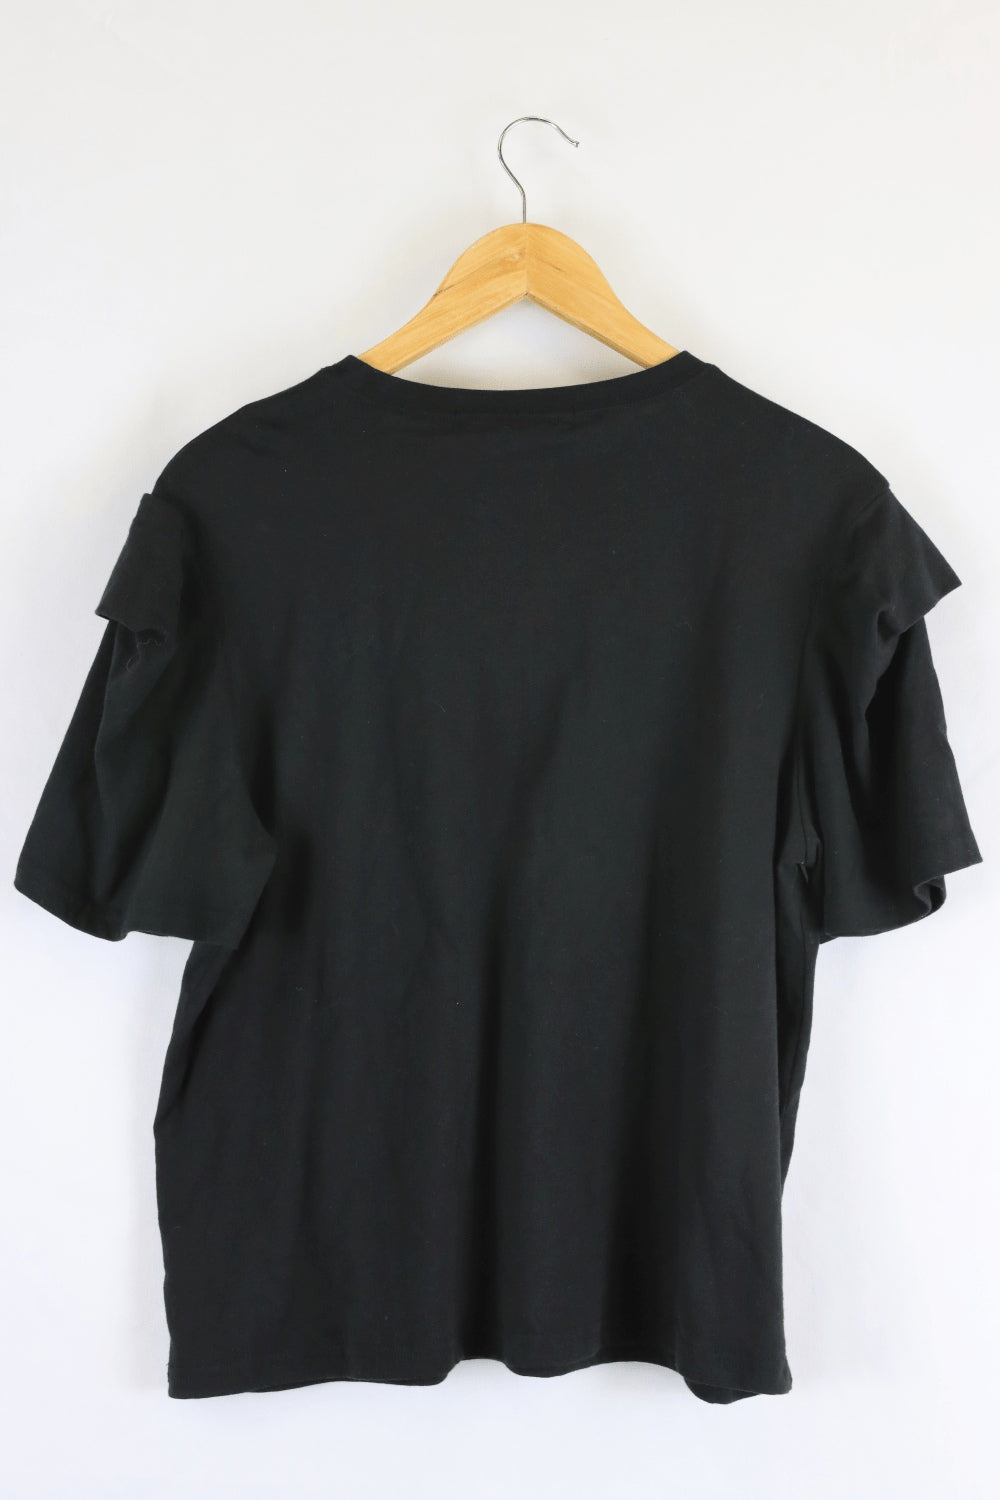 COOP by Trelise Cooper Black T Shirt M